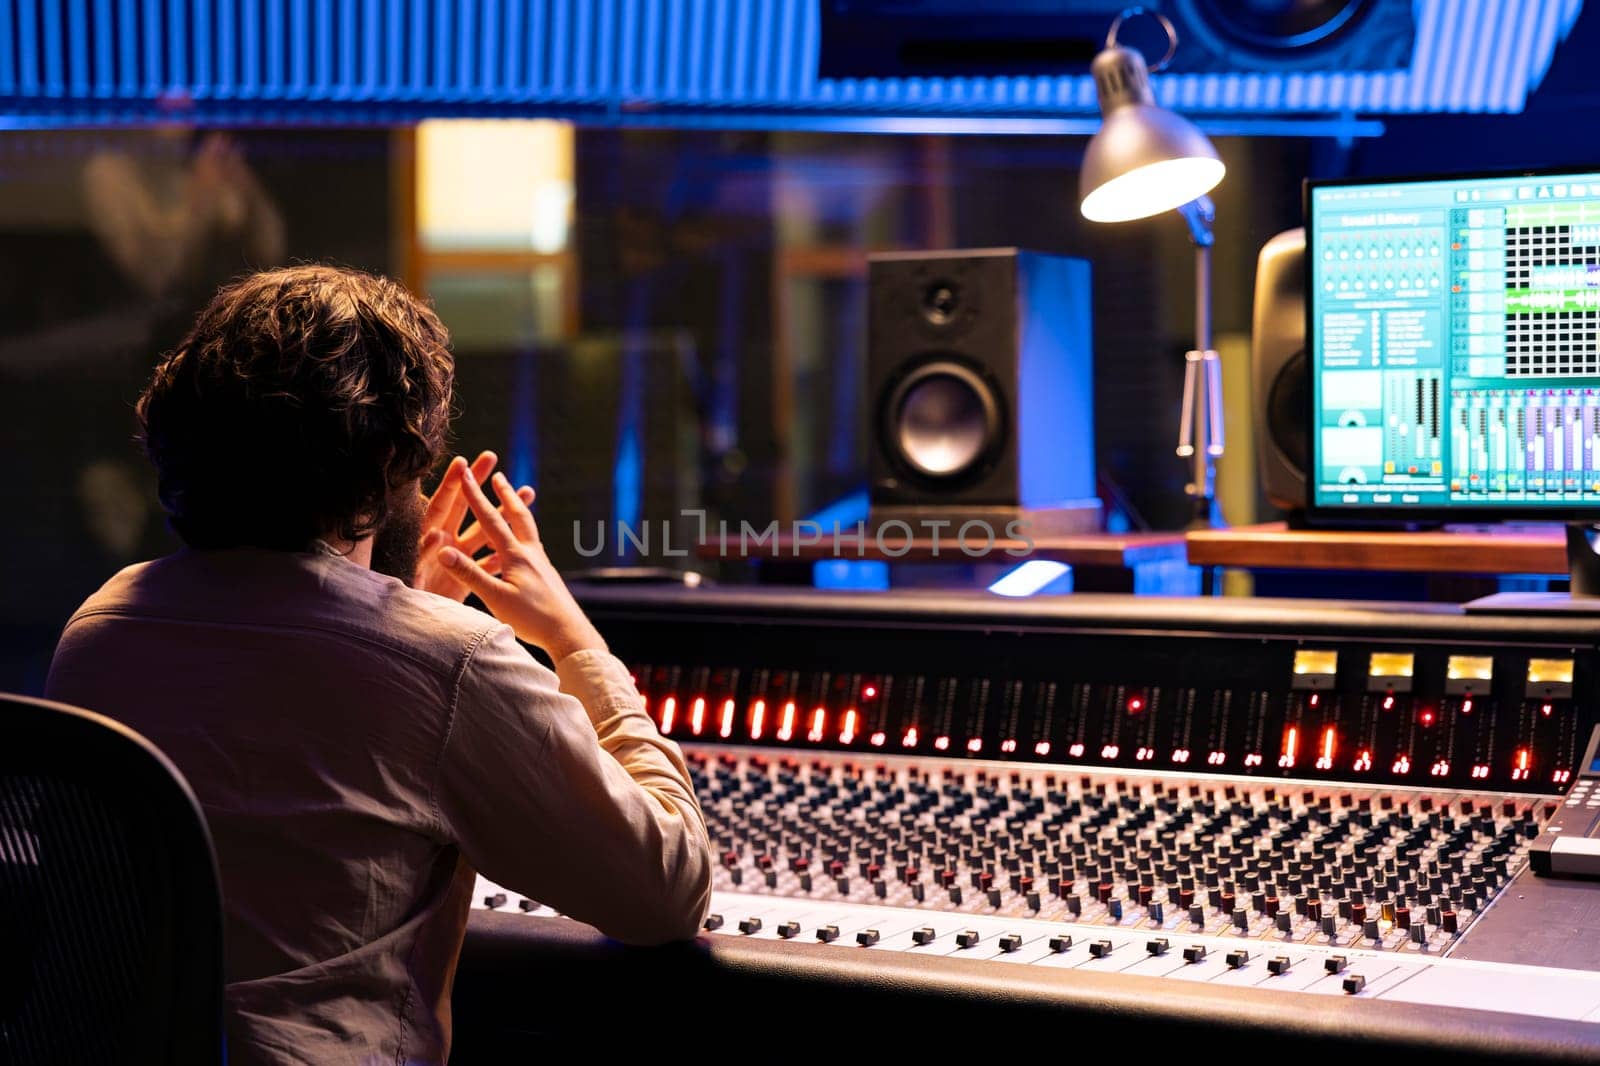 Focused sound designer processing and creating tunes in control room by DCStudio